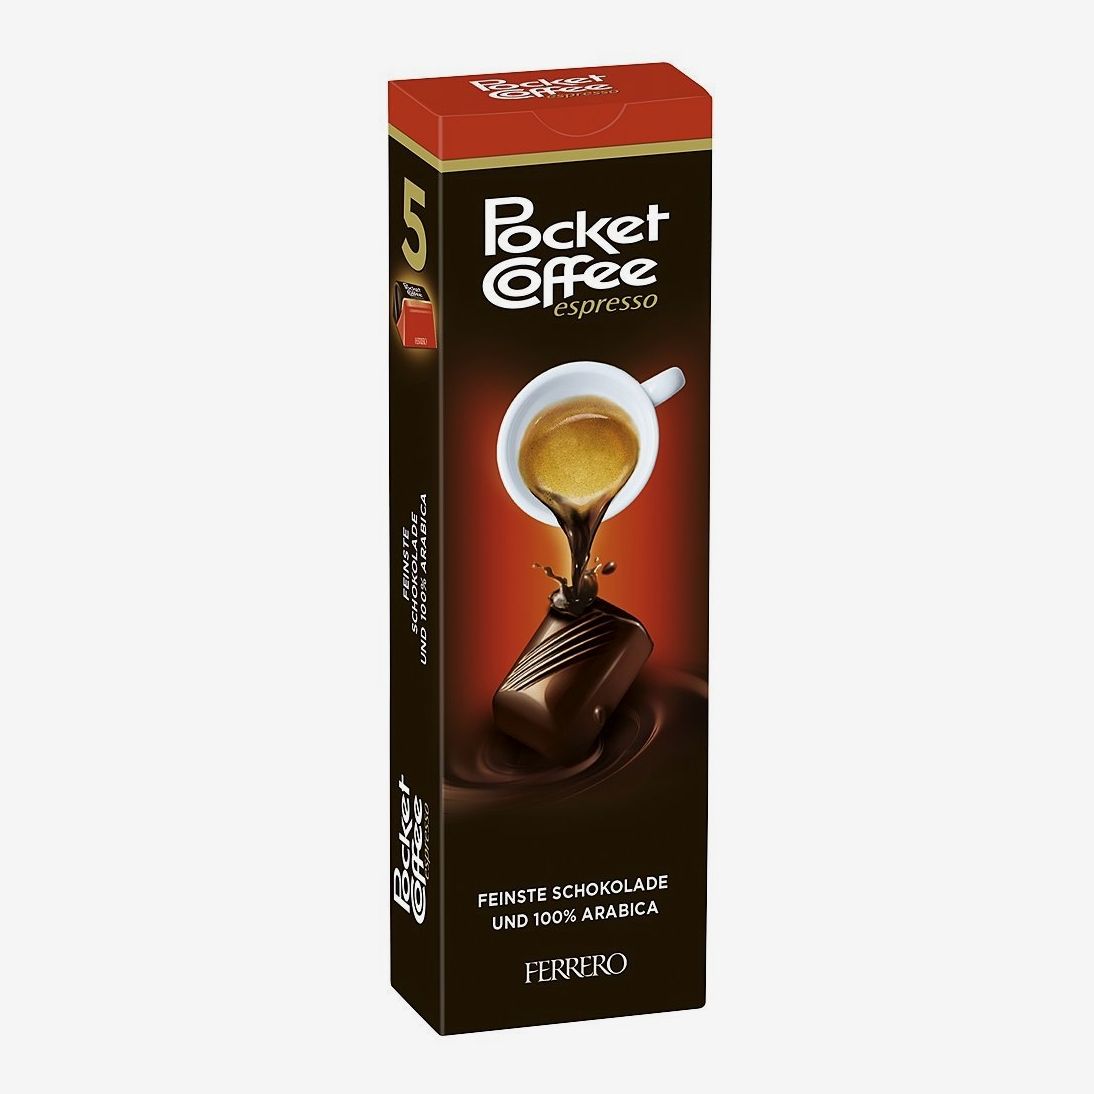 Pocket Coffee Ferrero - Deliciously Decadent Chocolate Treats